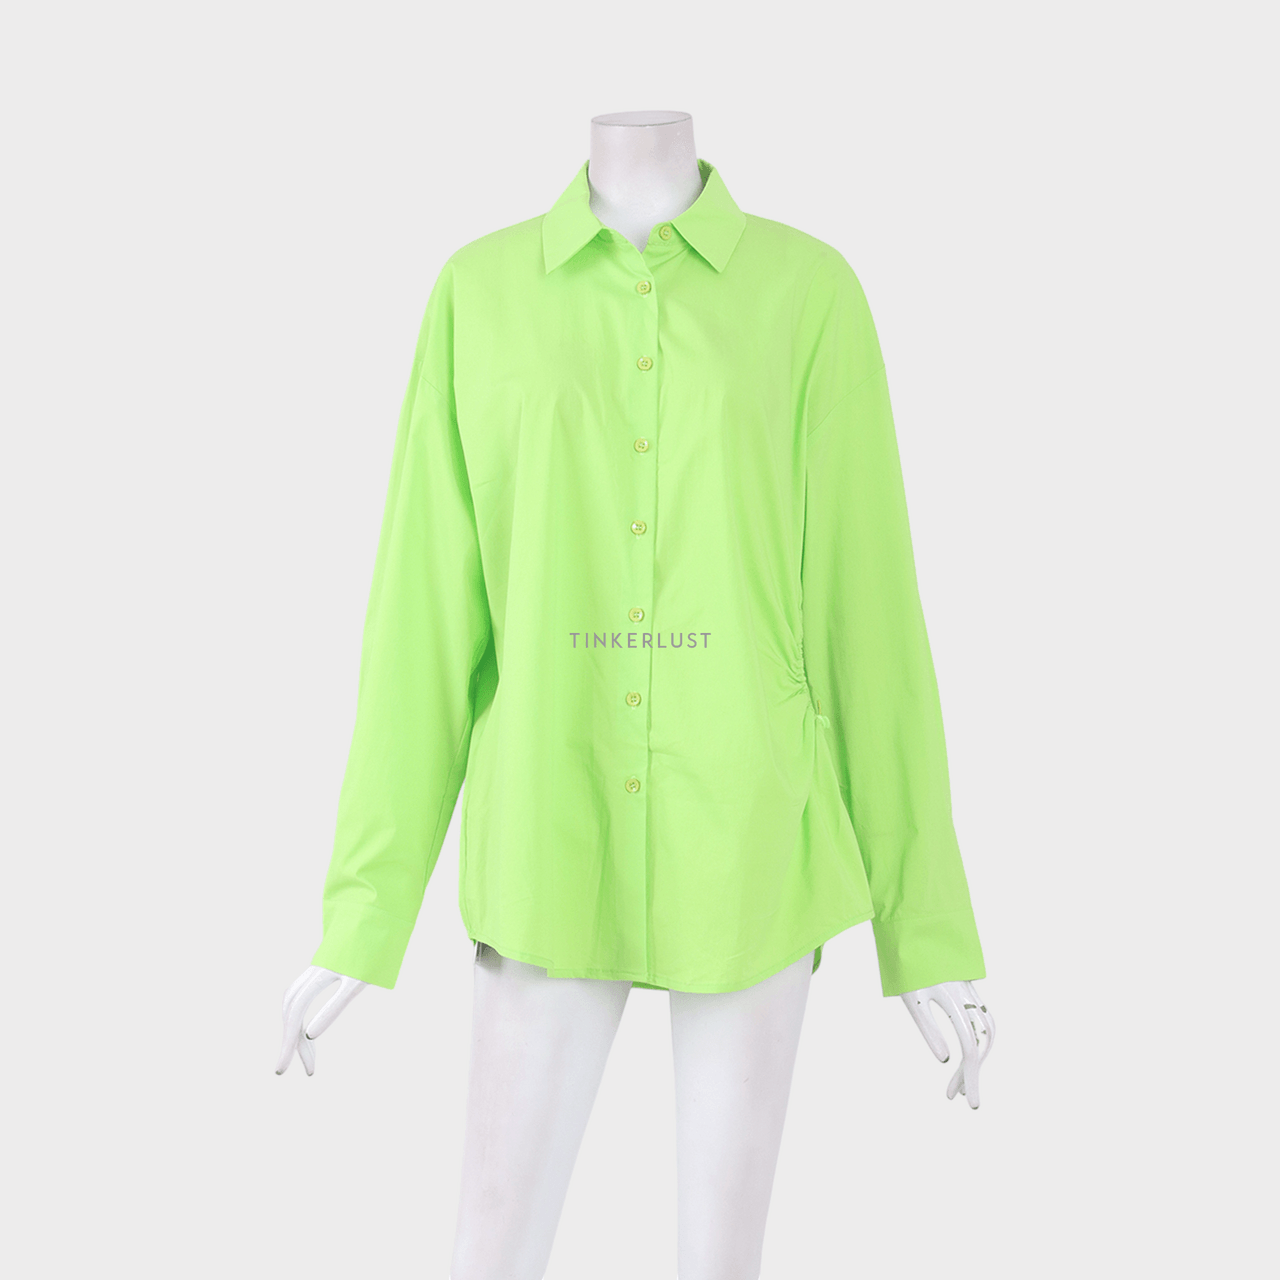 3Mongkis Green Neon Shirt